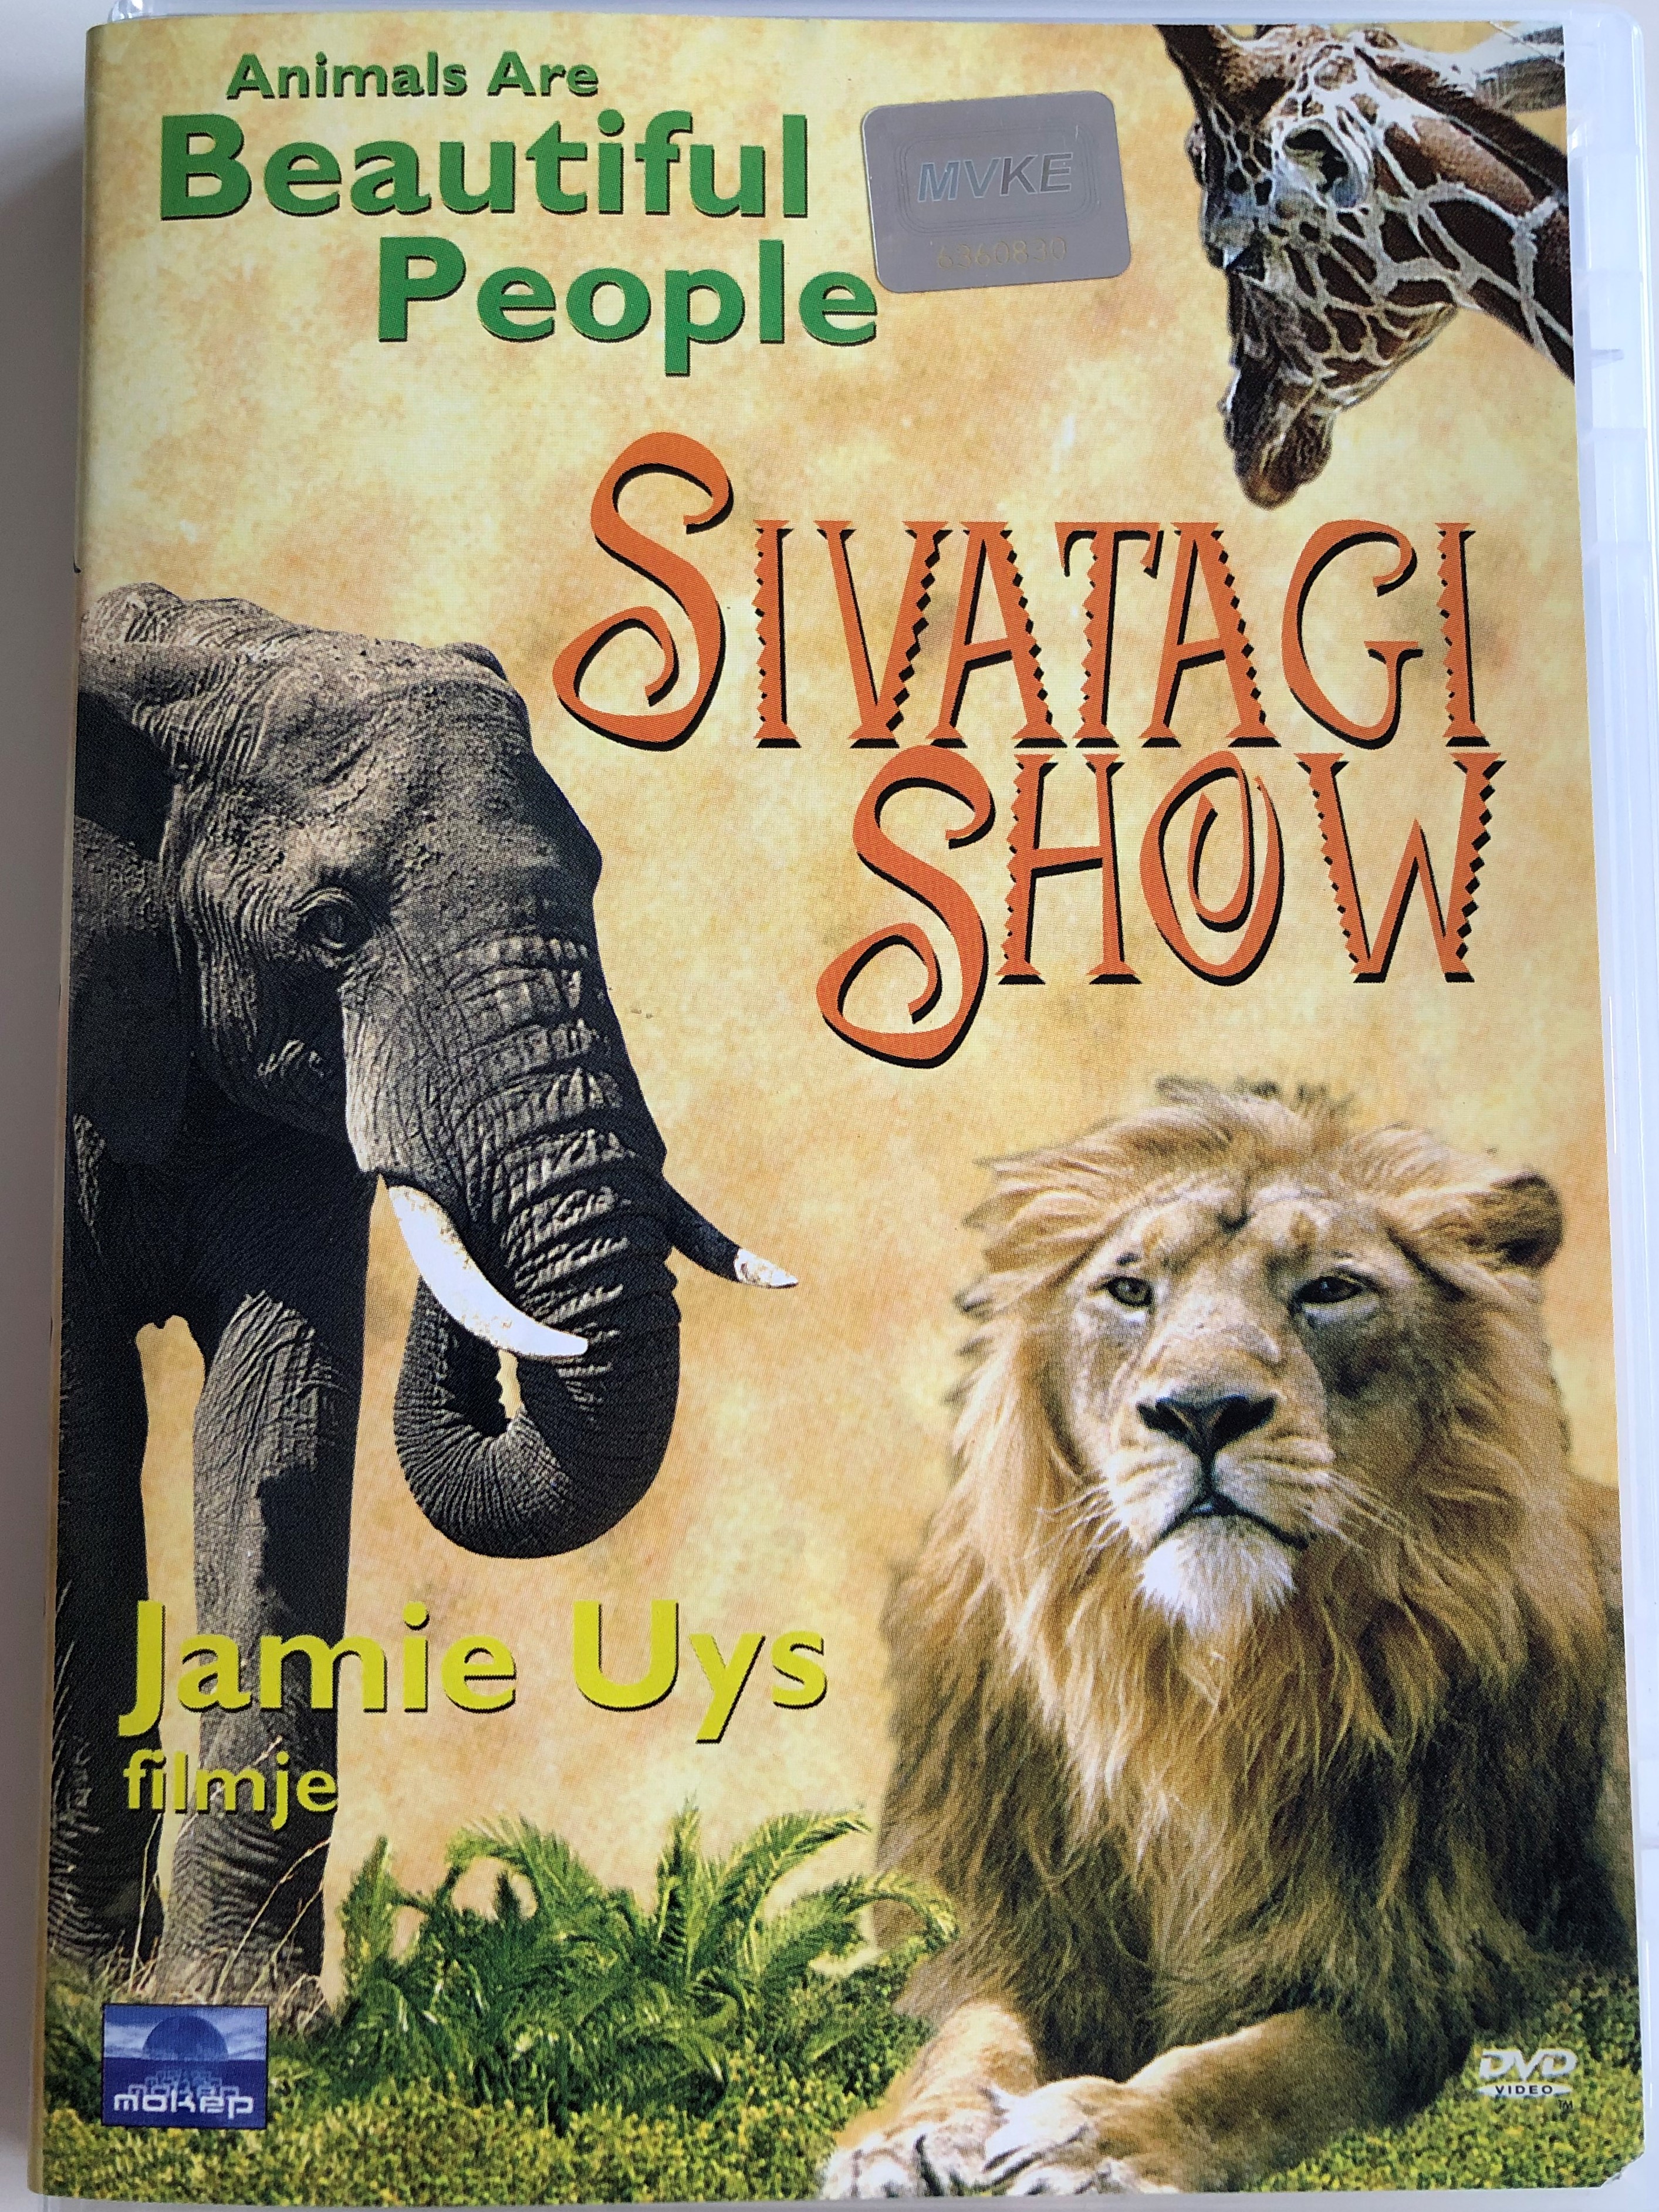 animals-are-beautiful-people-dvd-1974-sivatagi-show-1.jpg